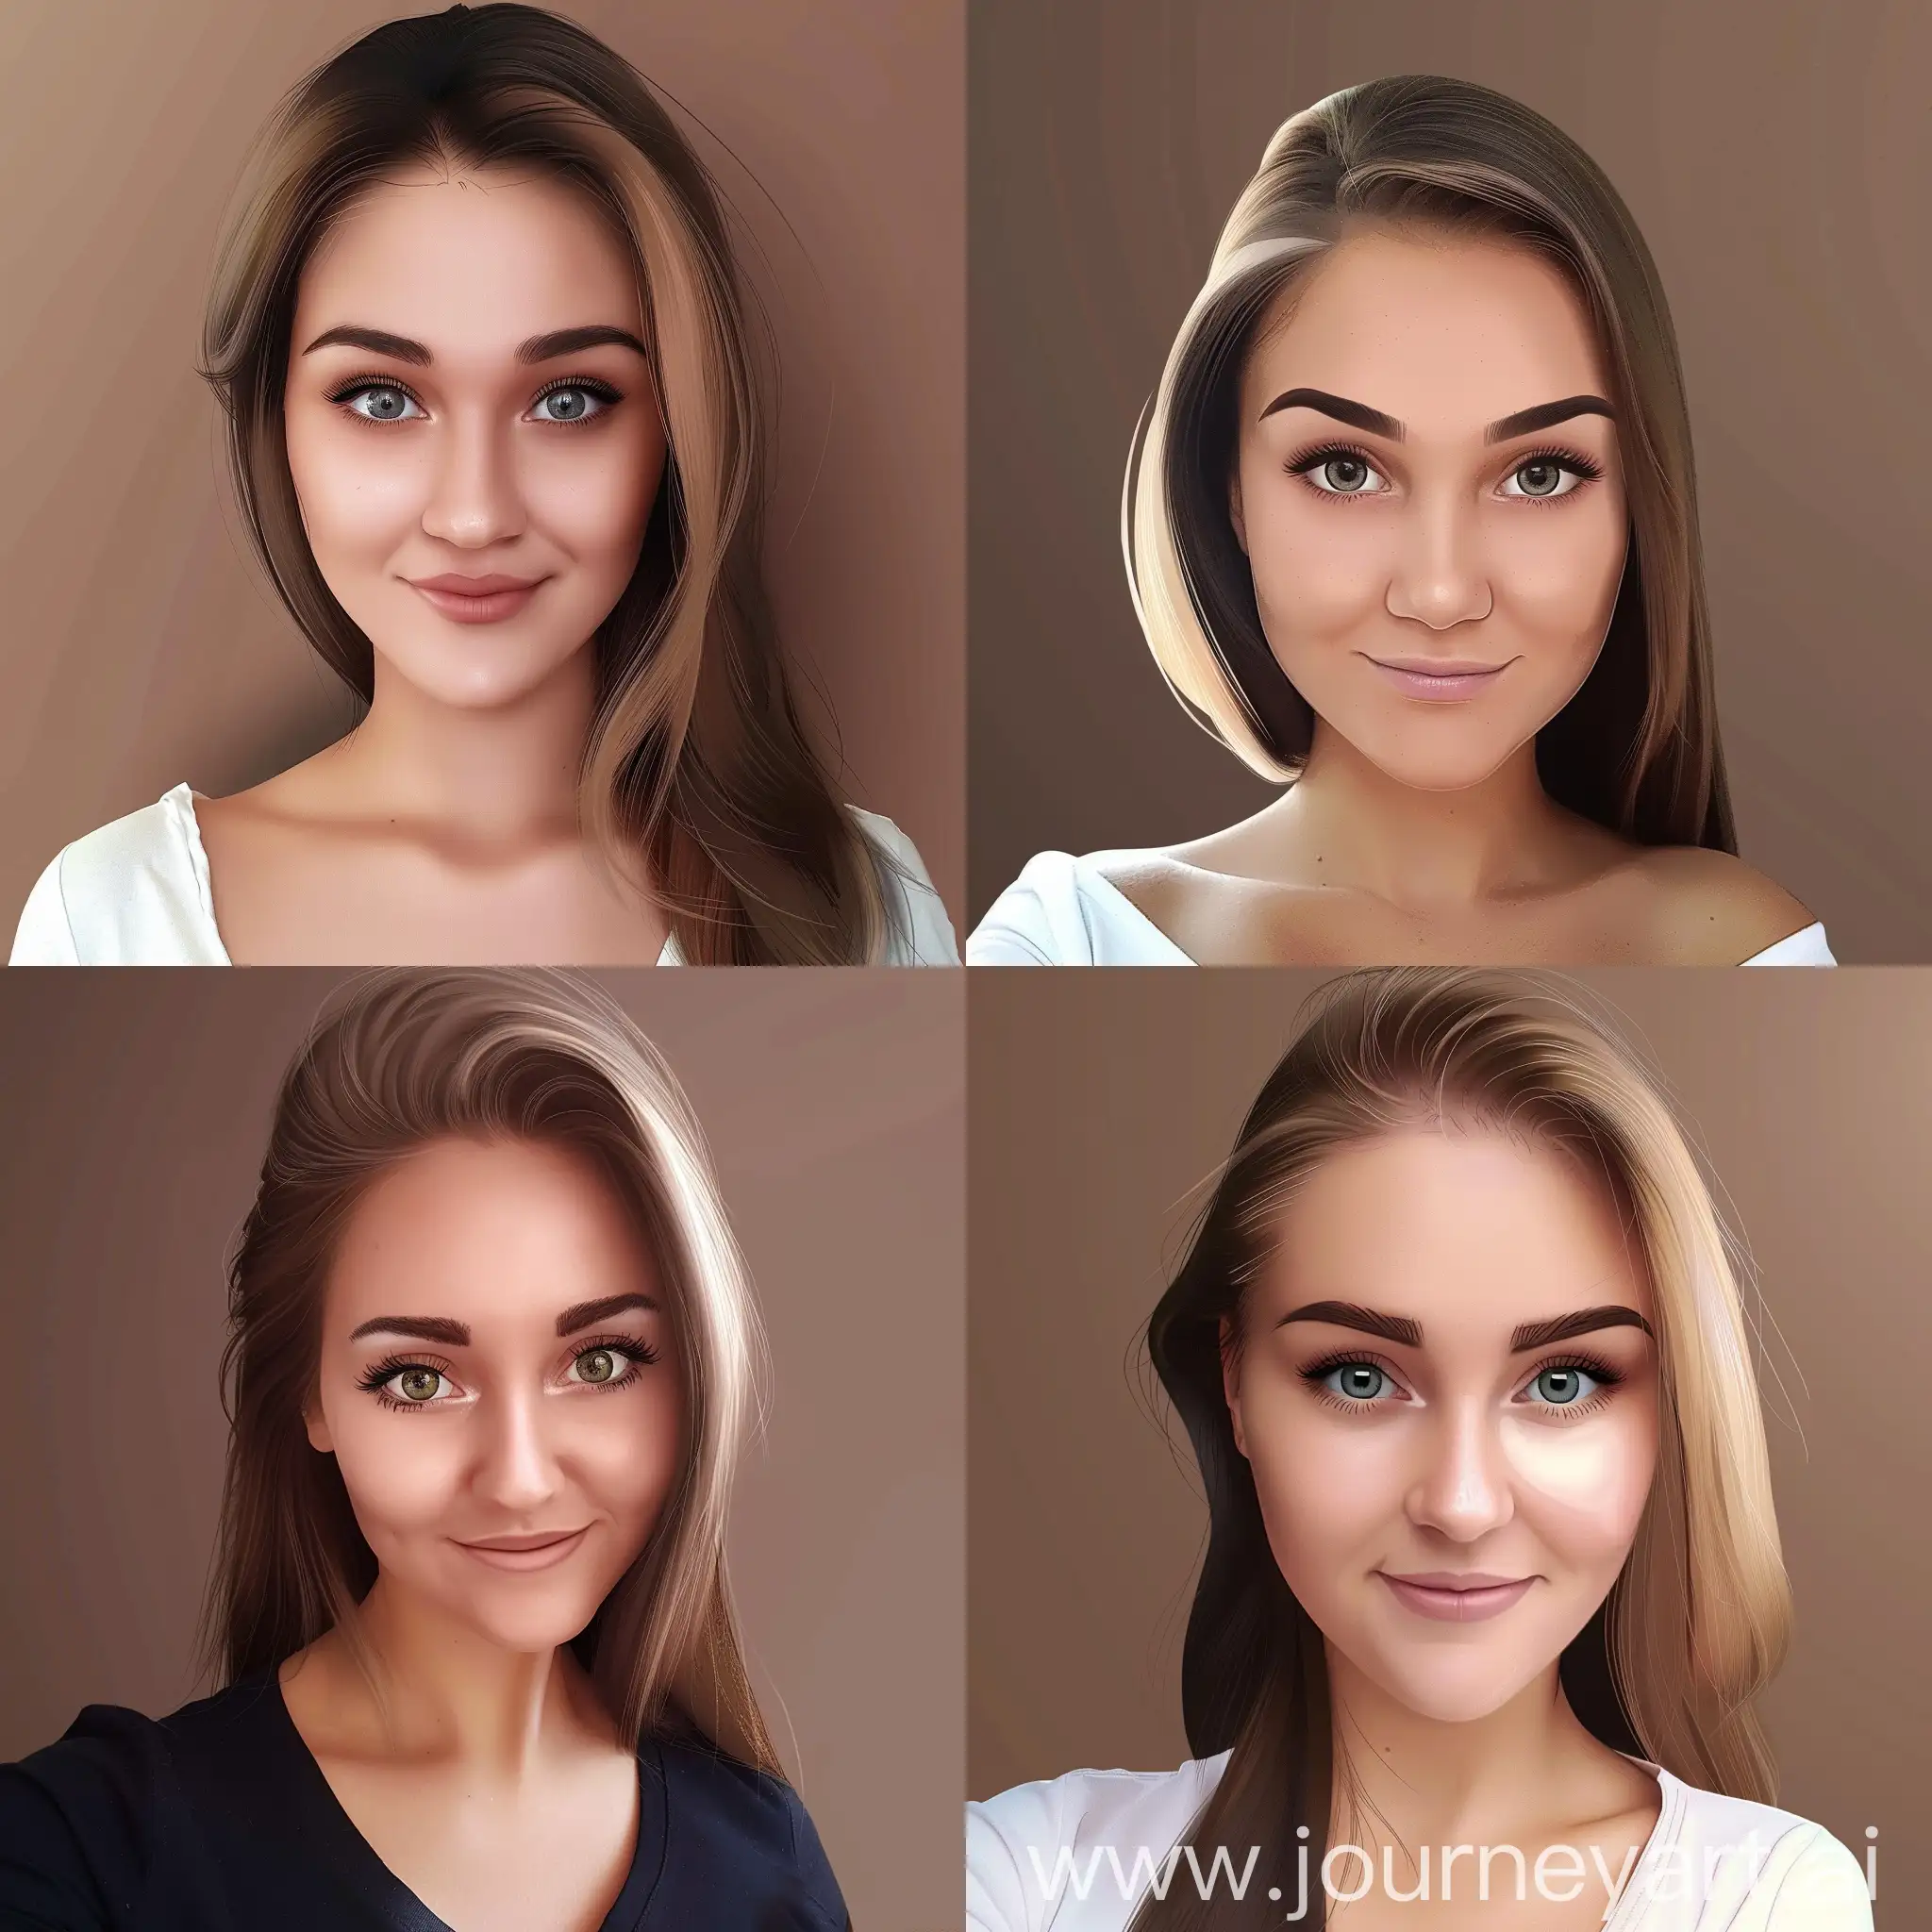 Cartoon-Realistic-Woman-with-Sleek-Hair-on-Brown-Background